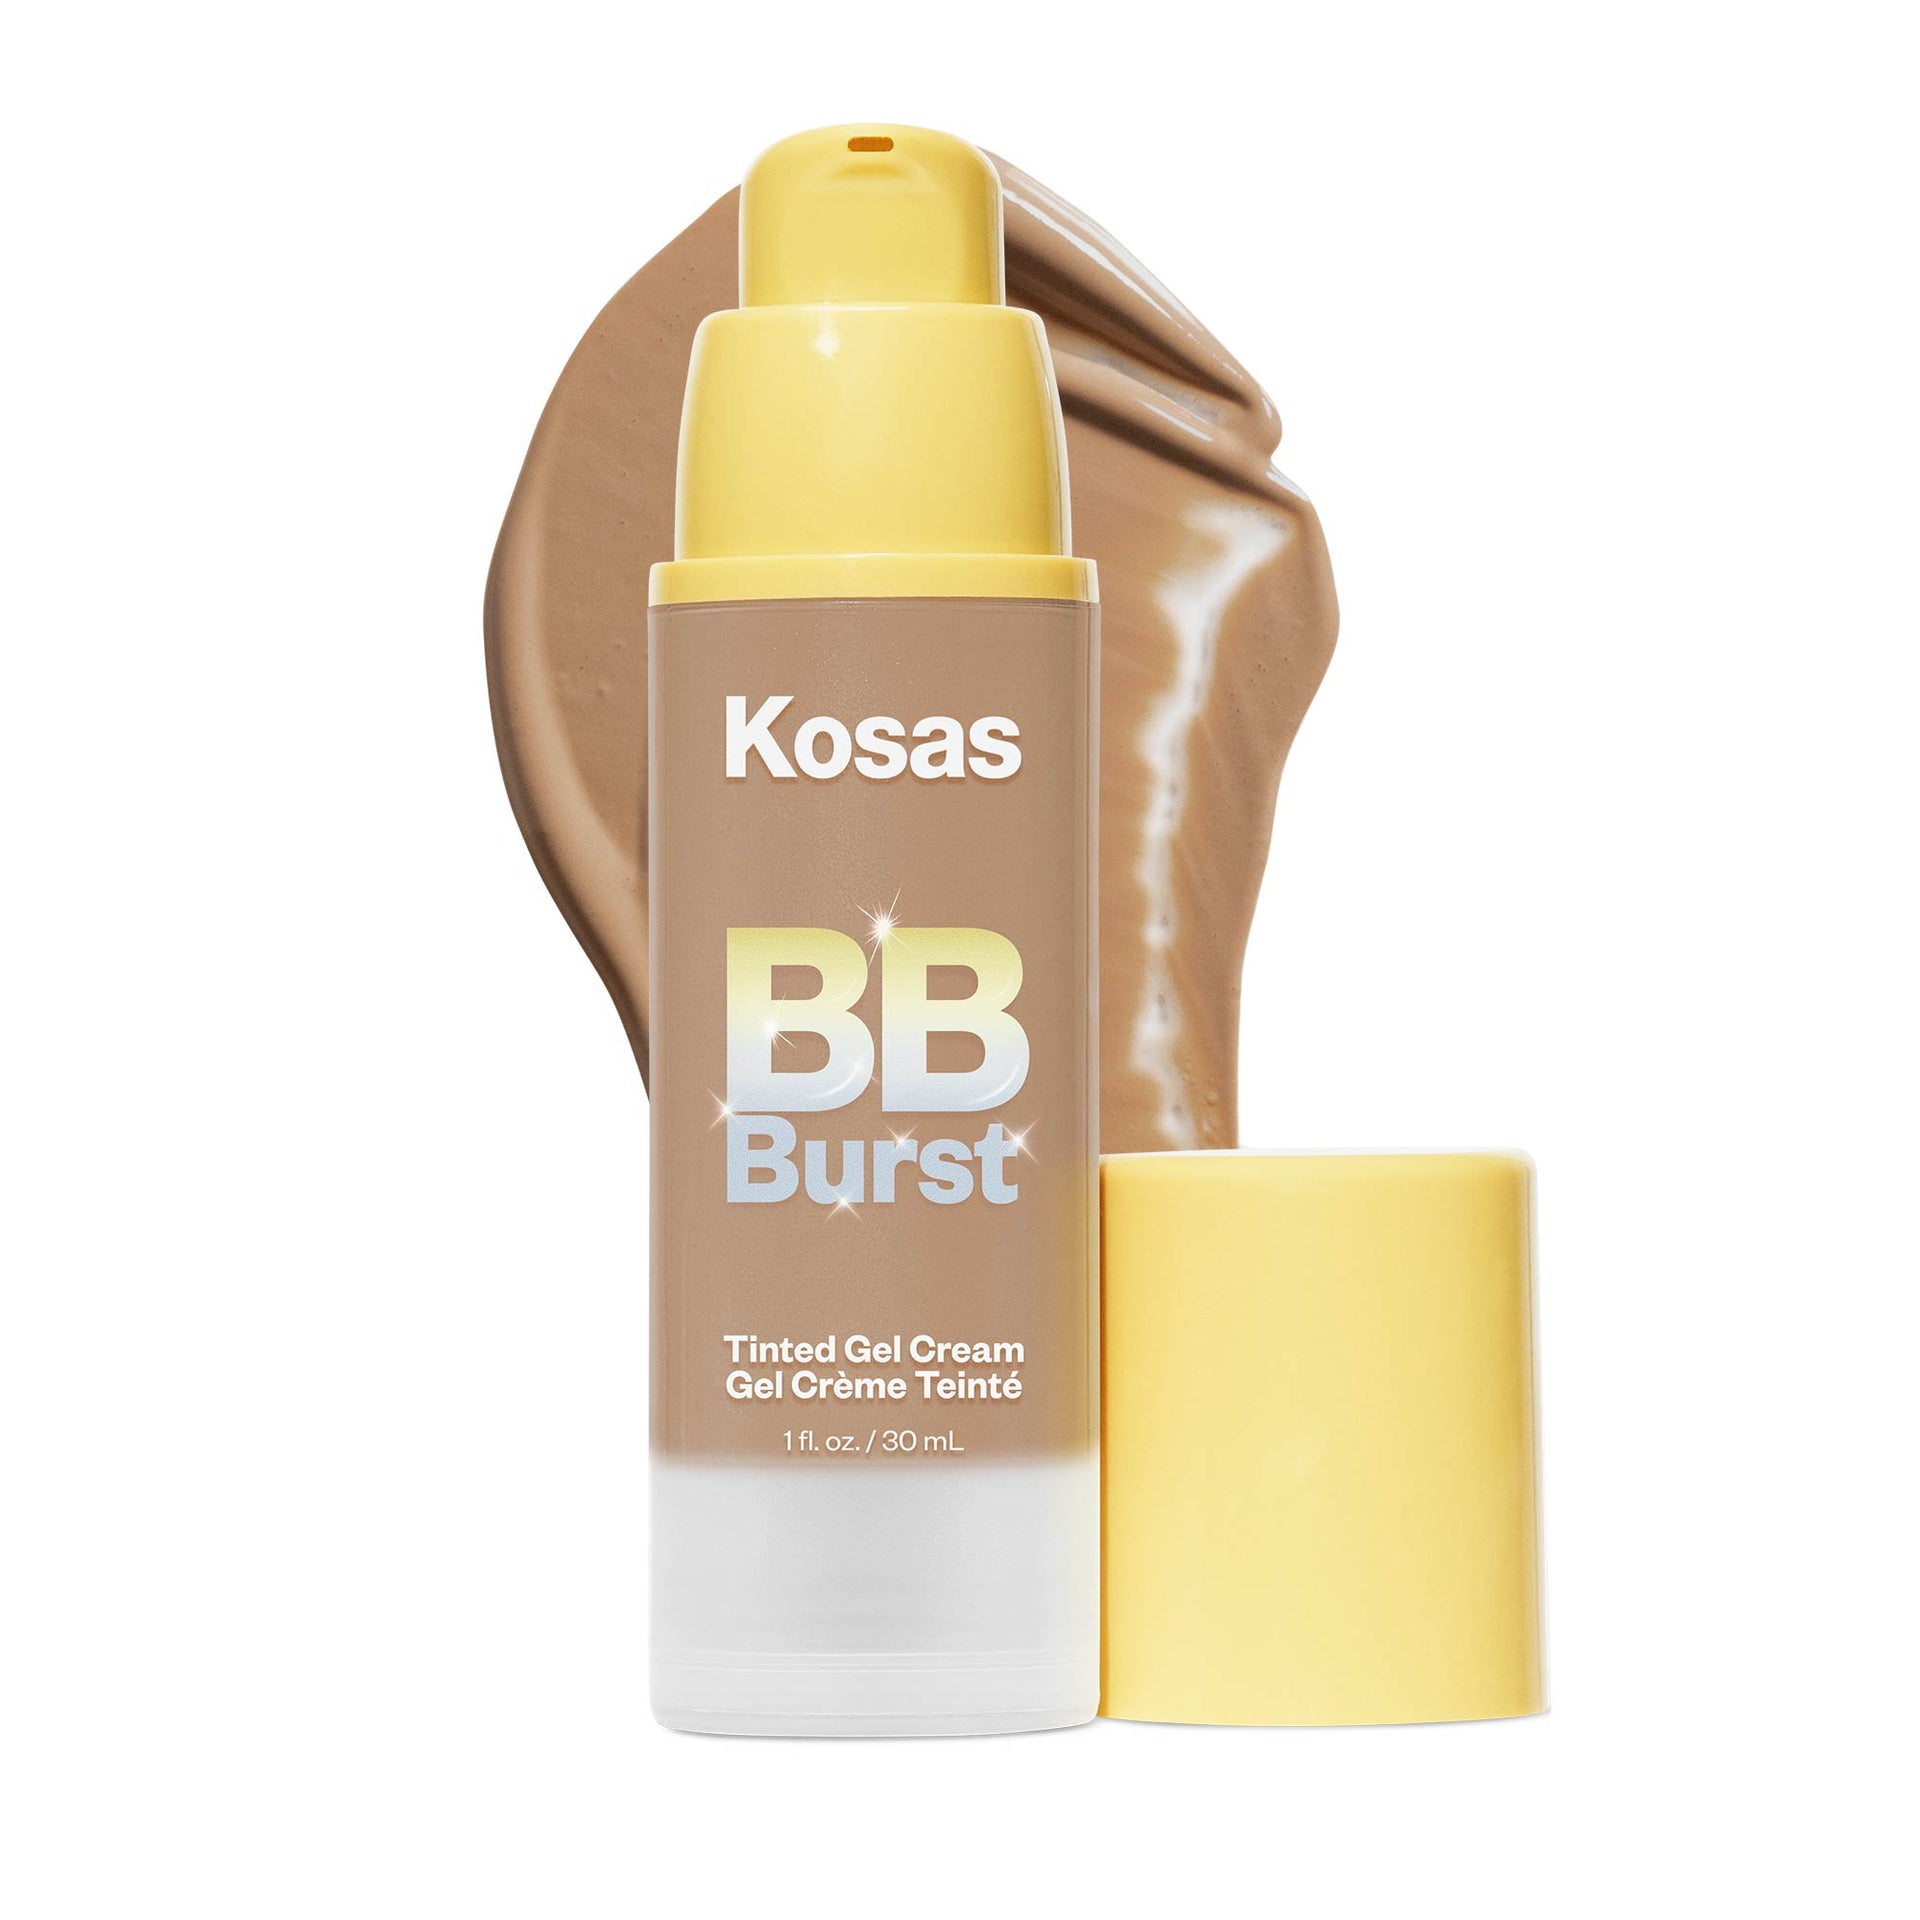 Kosas BB Burst in the shade Deep Neutral Warm 32